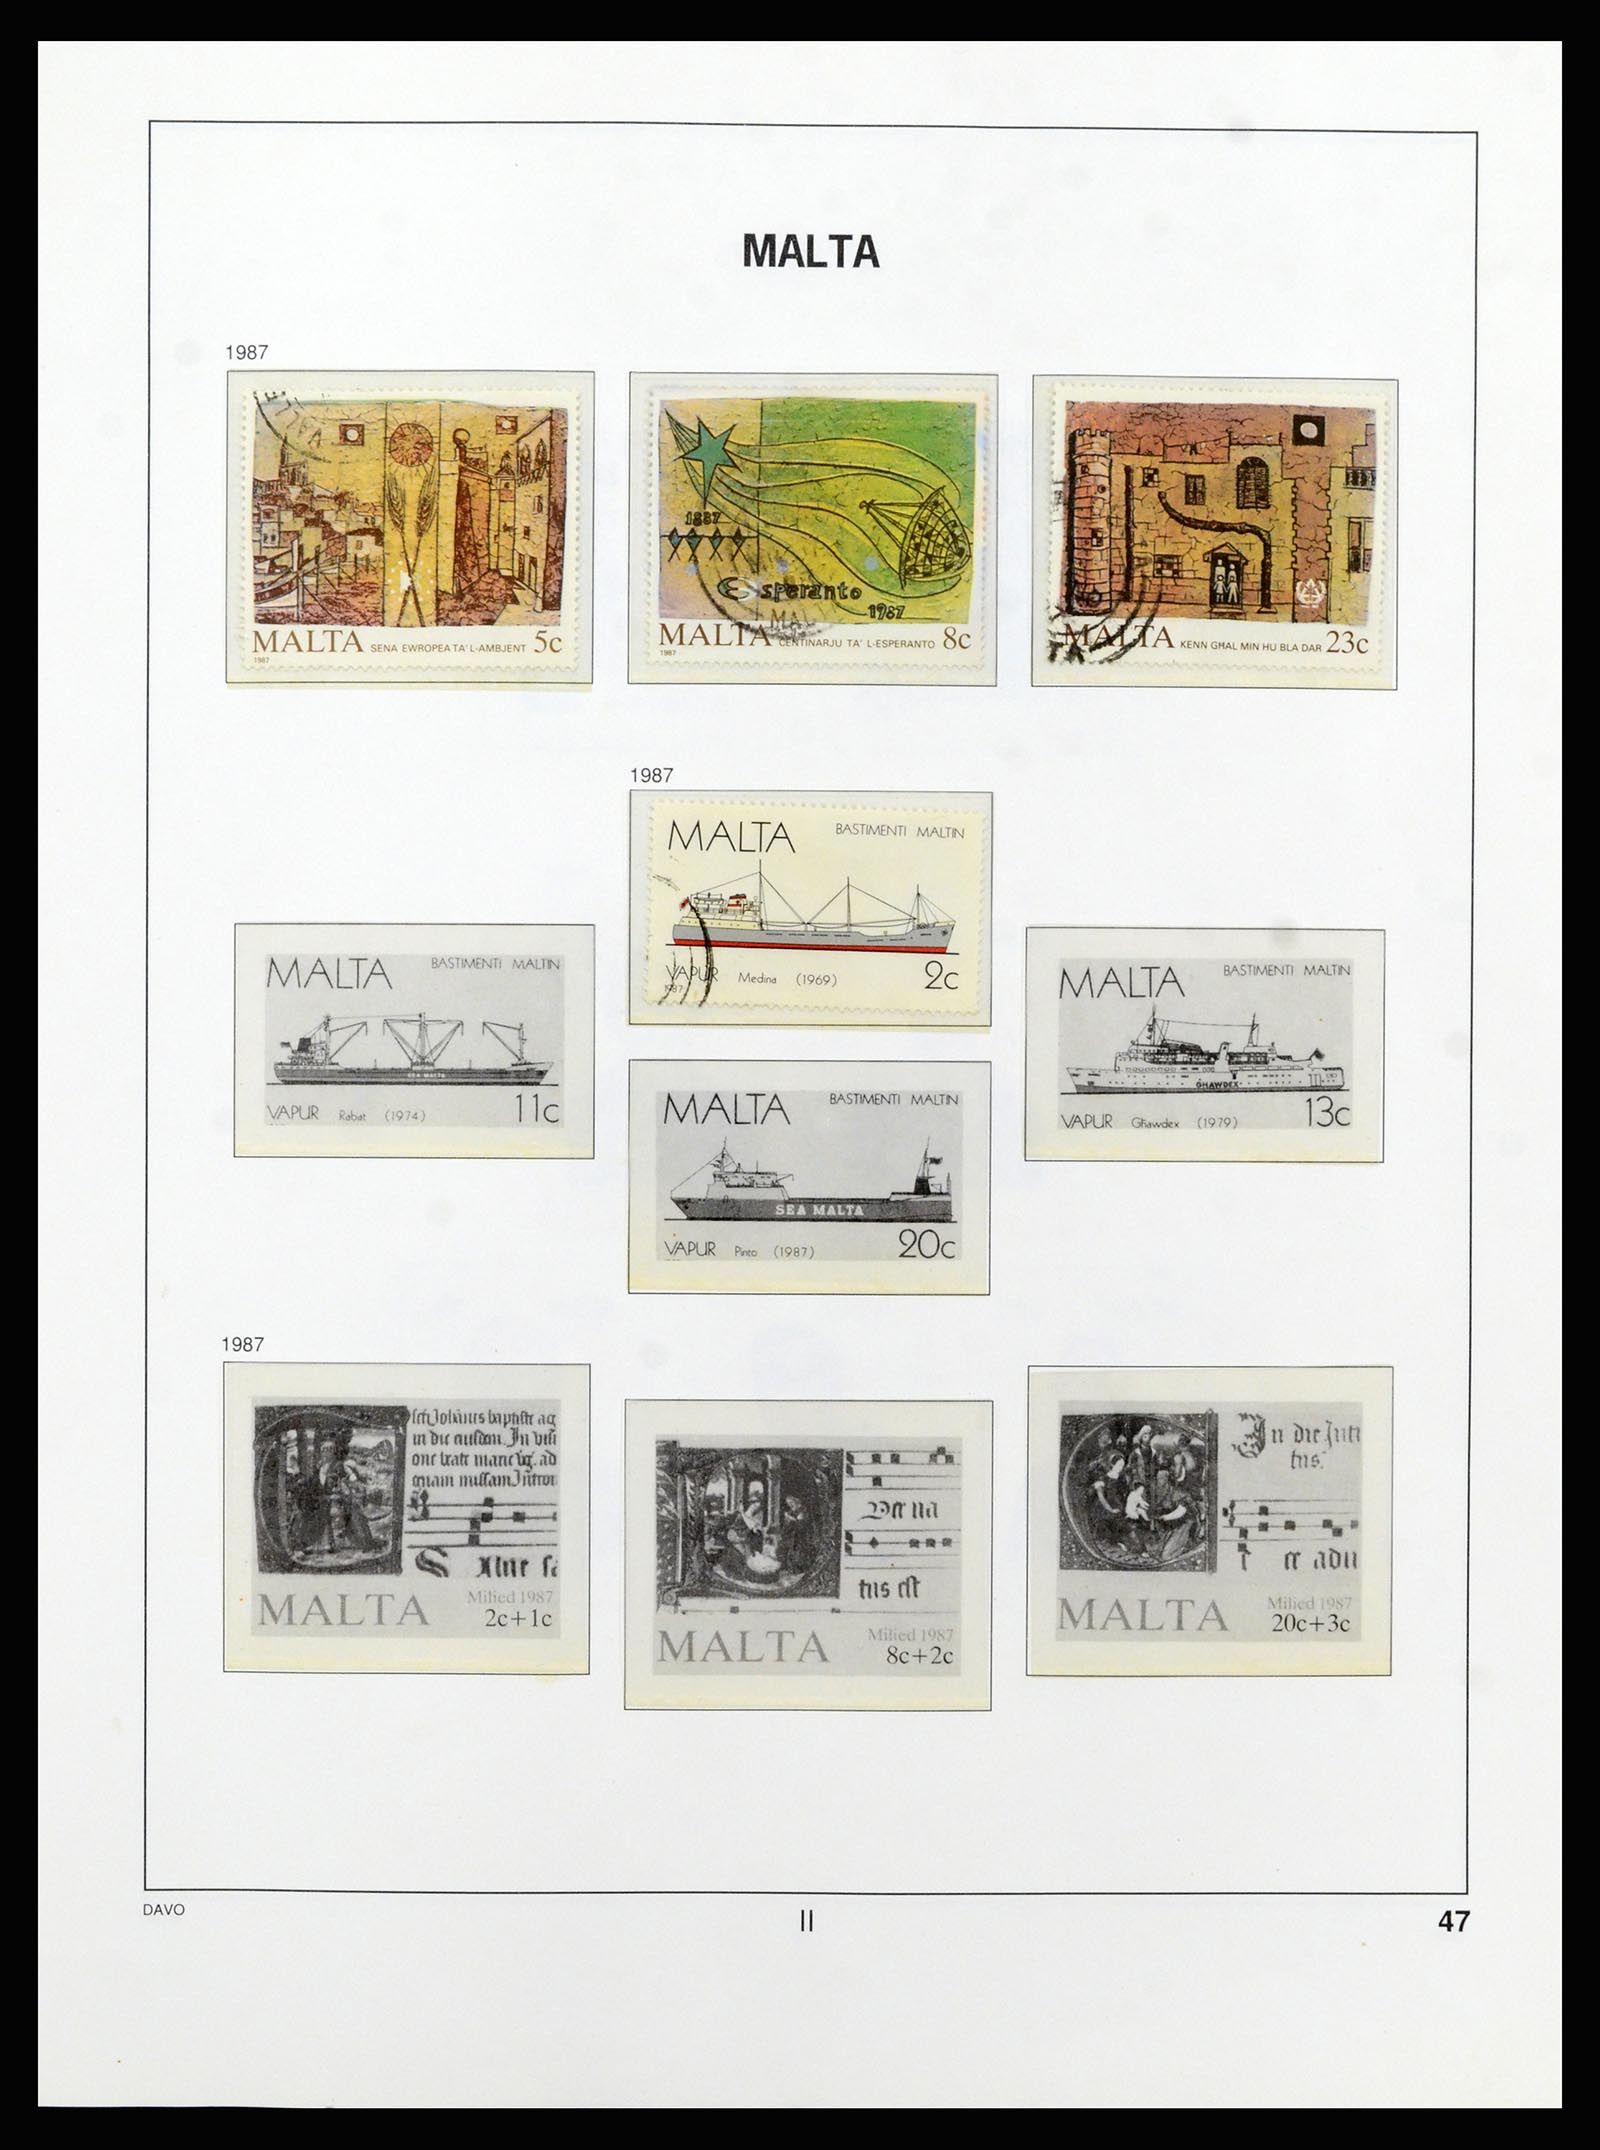 37212 071 - Stamp collection 37212 Malta 1863-1989.